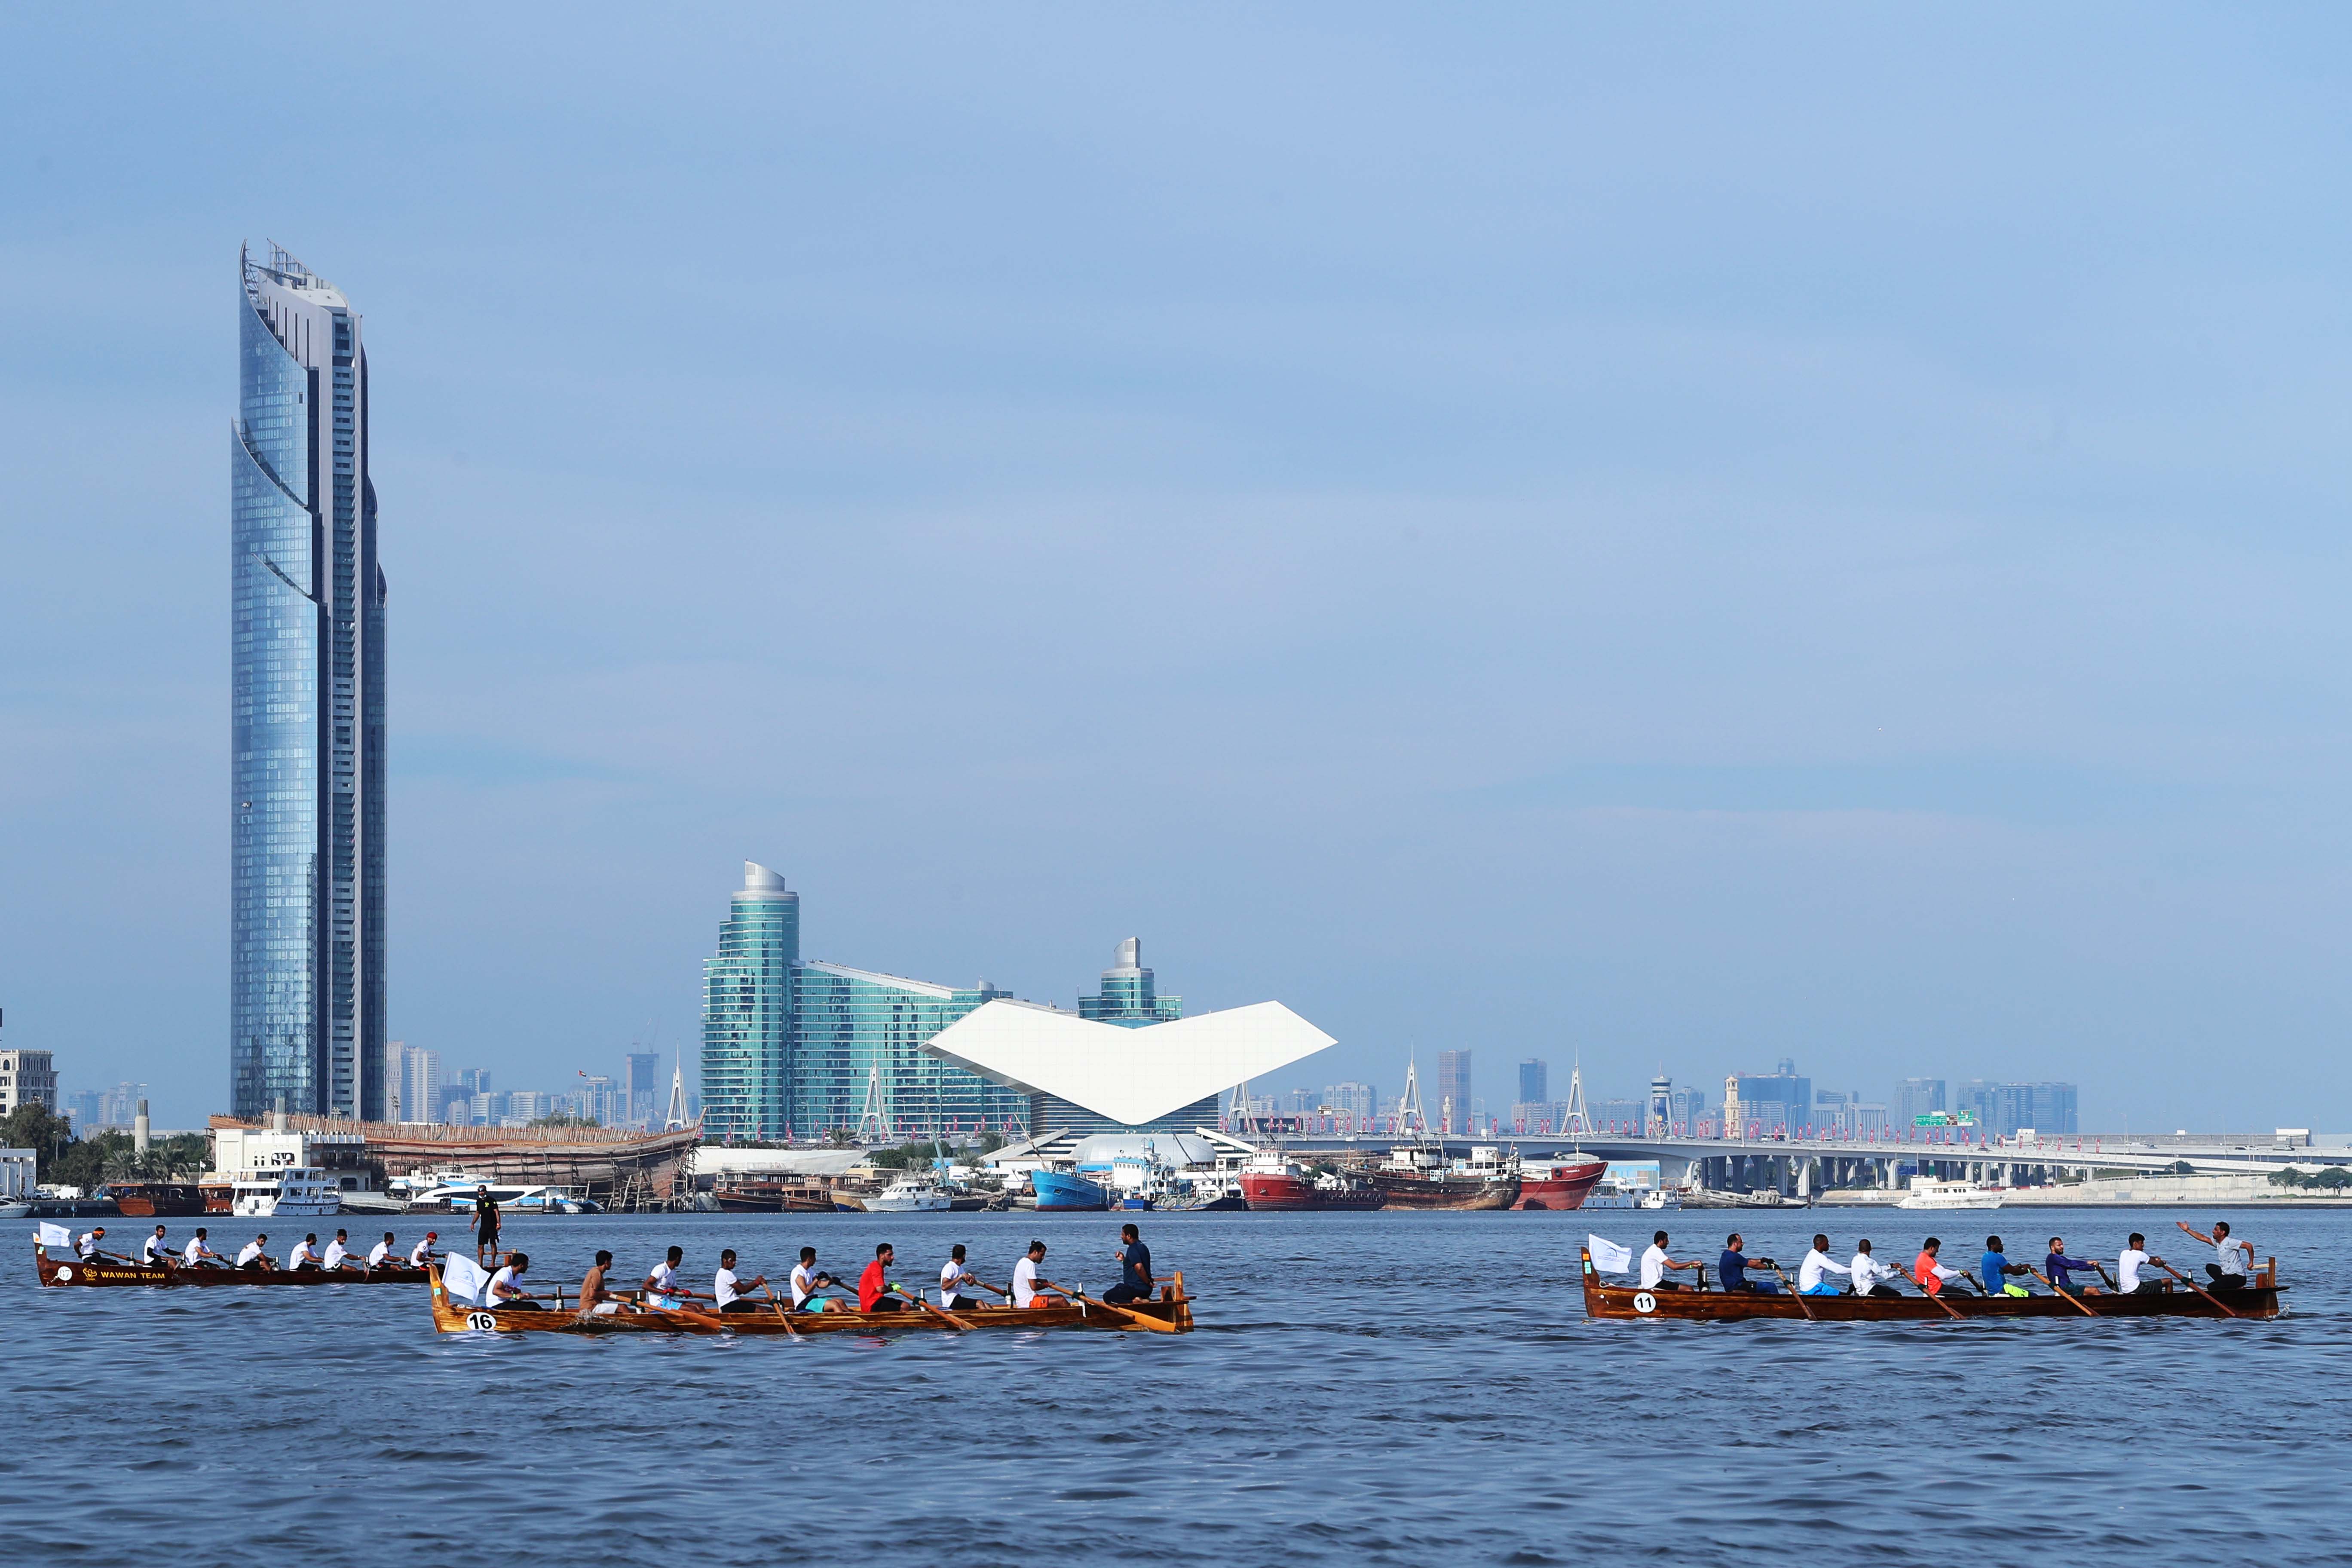 Traditional Rowing Race (27th Season) Kicks off on Sunday